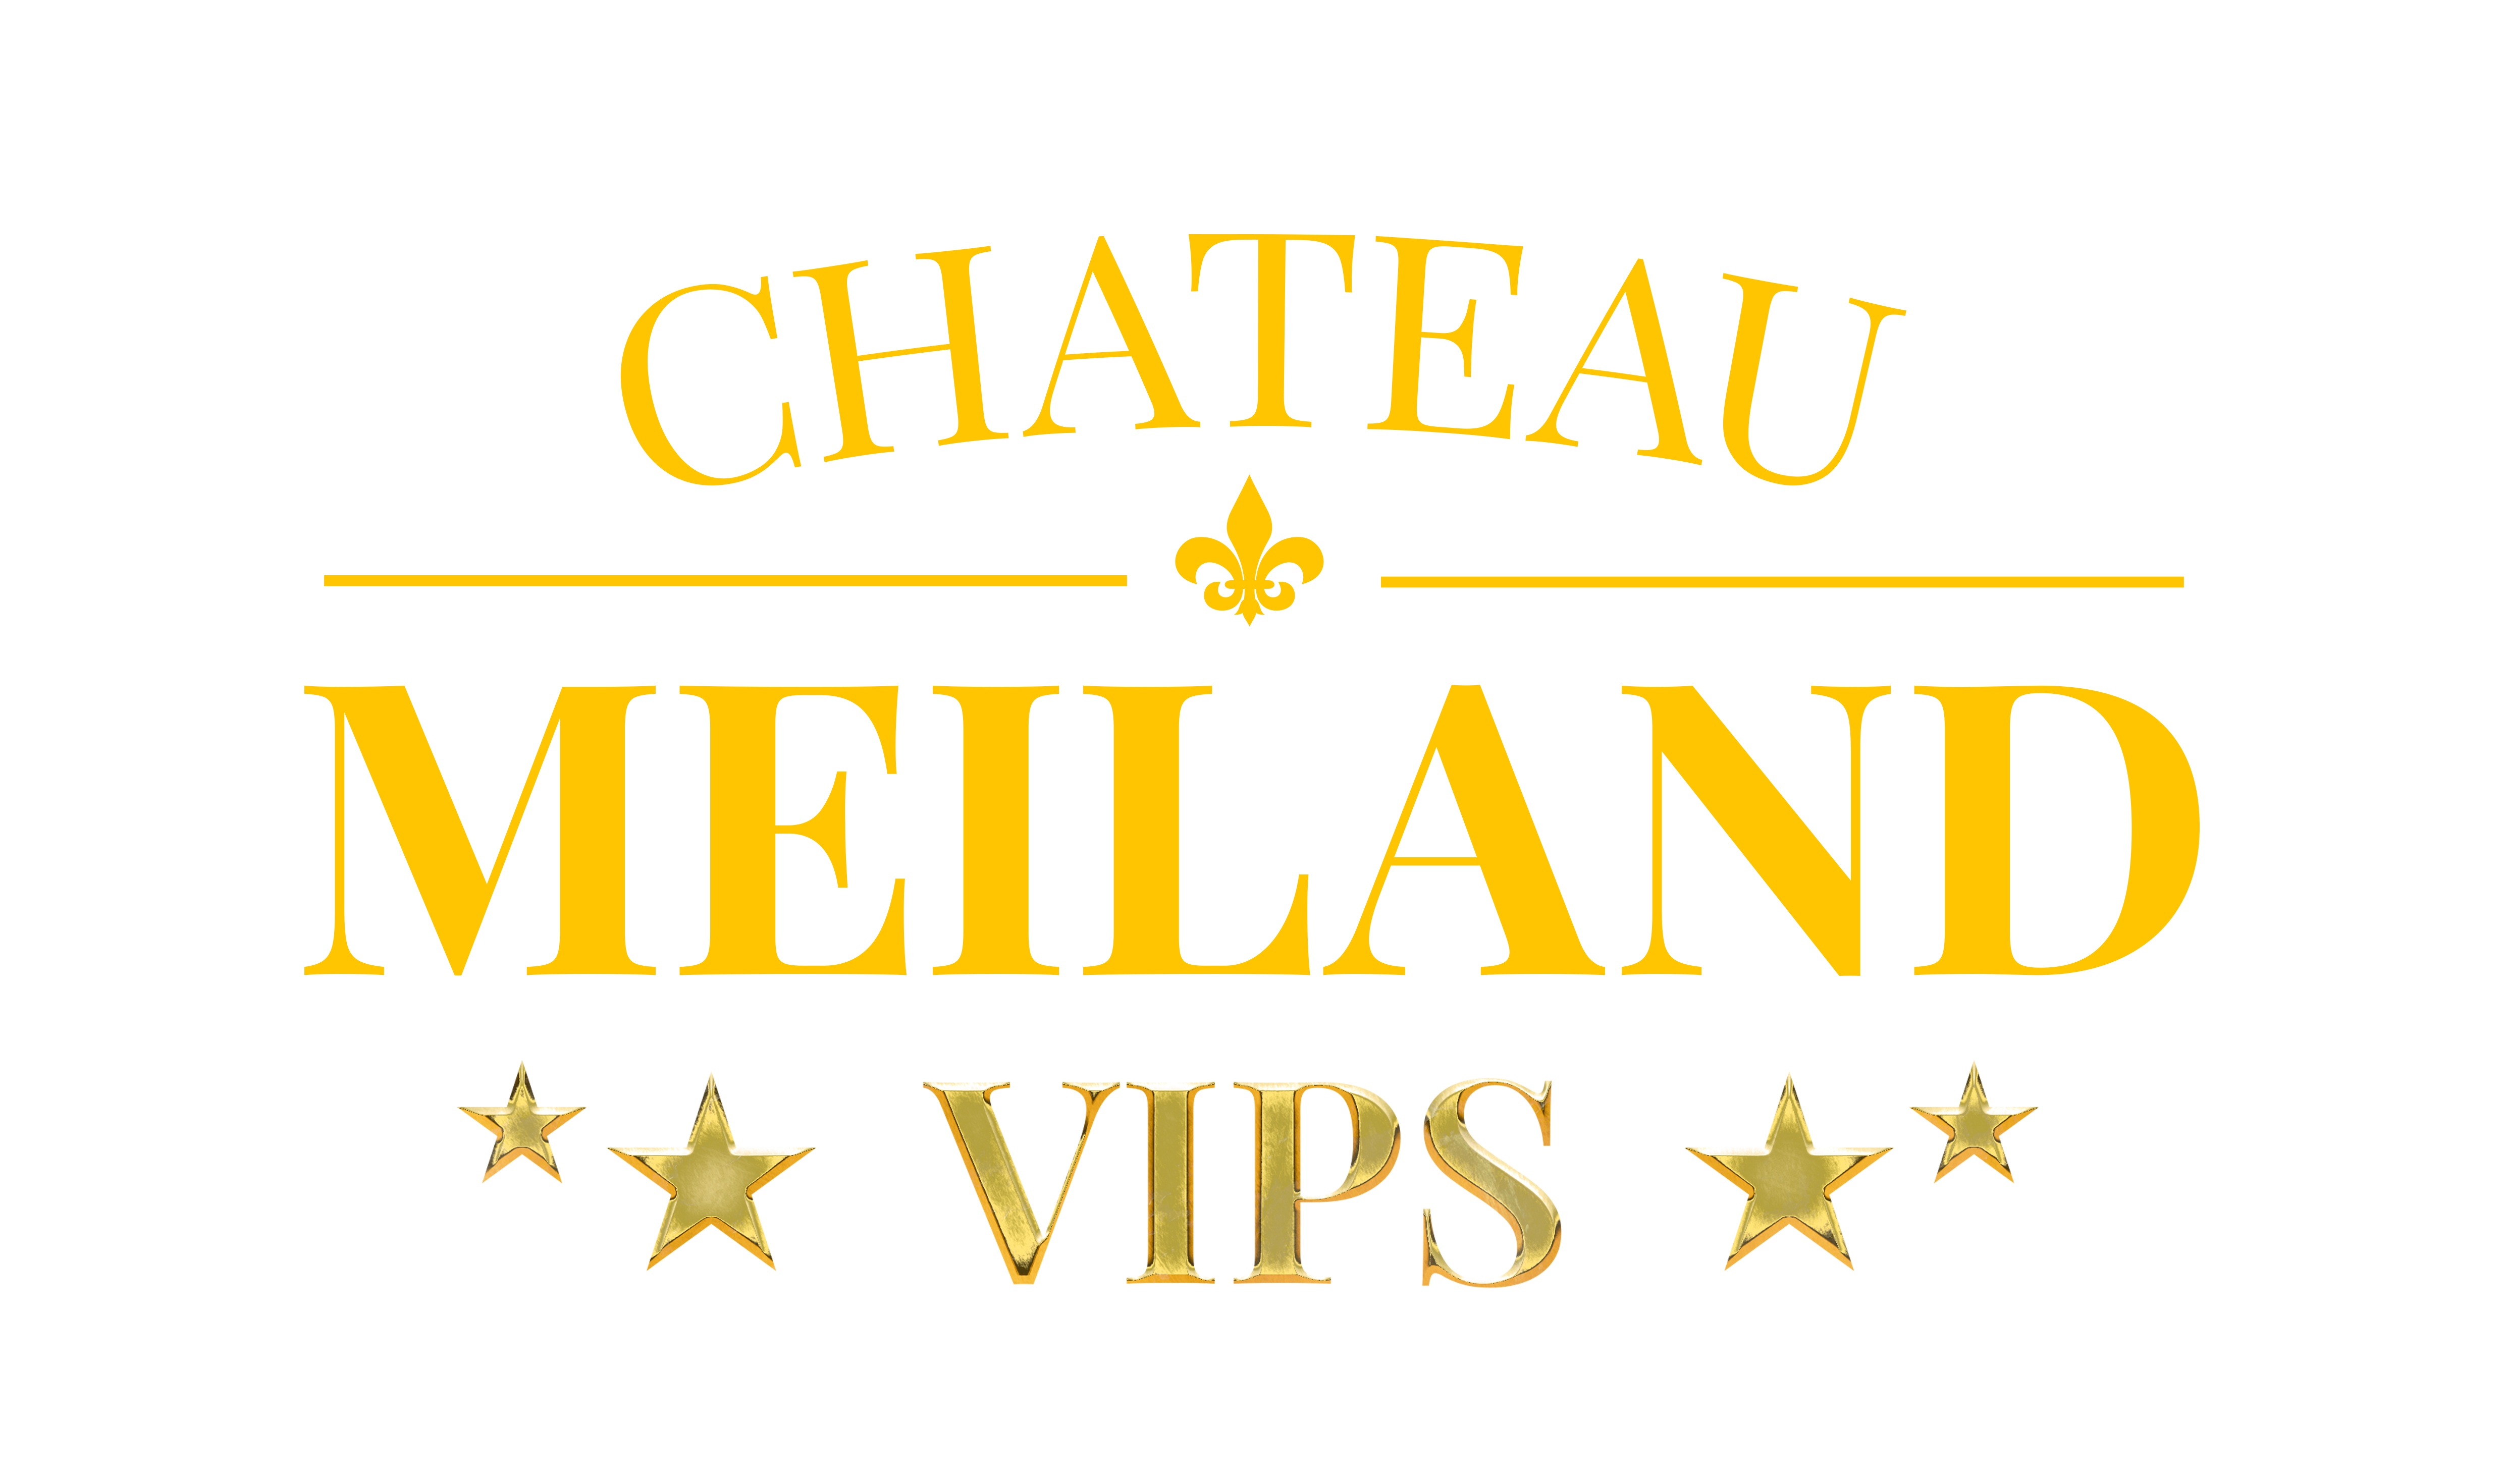 CHATEAU MEILAND VIPS